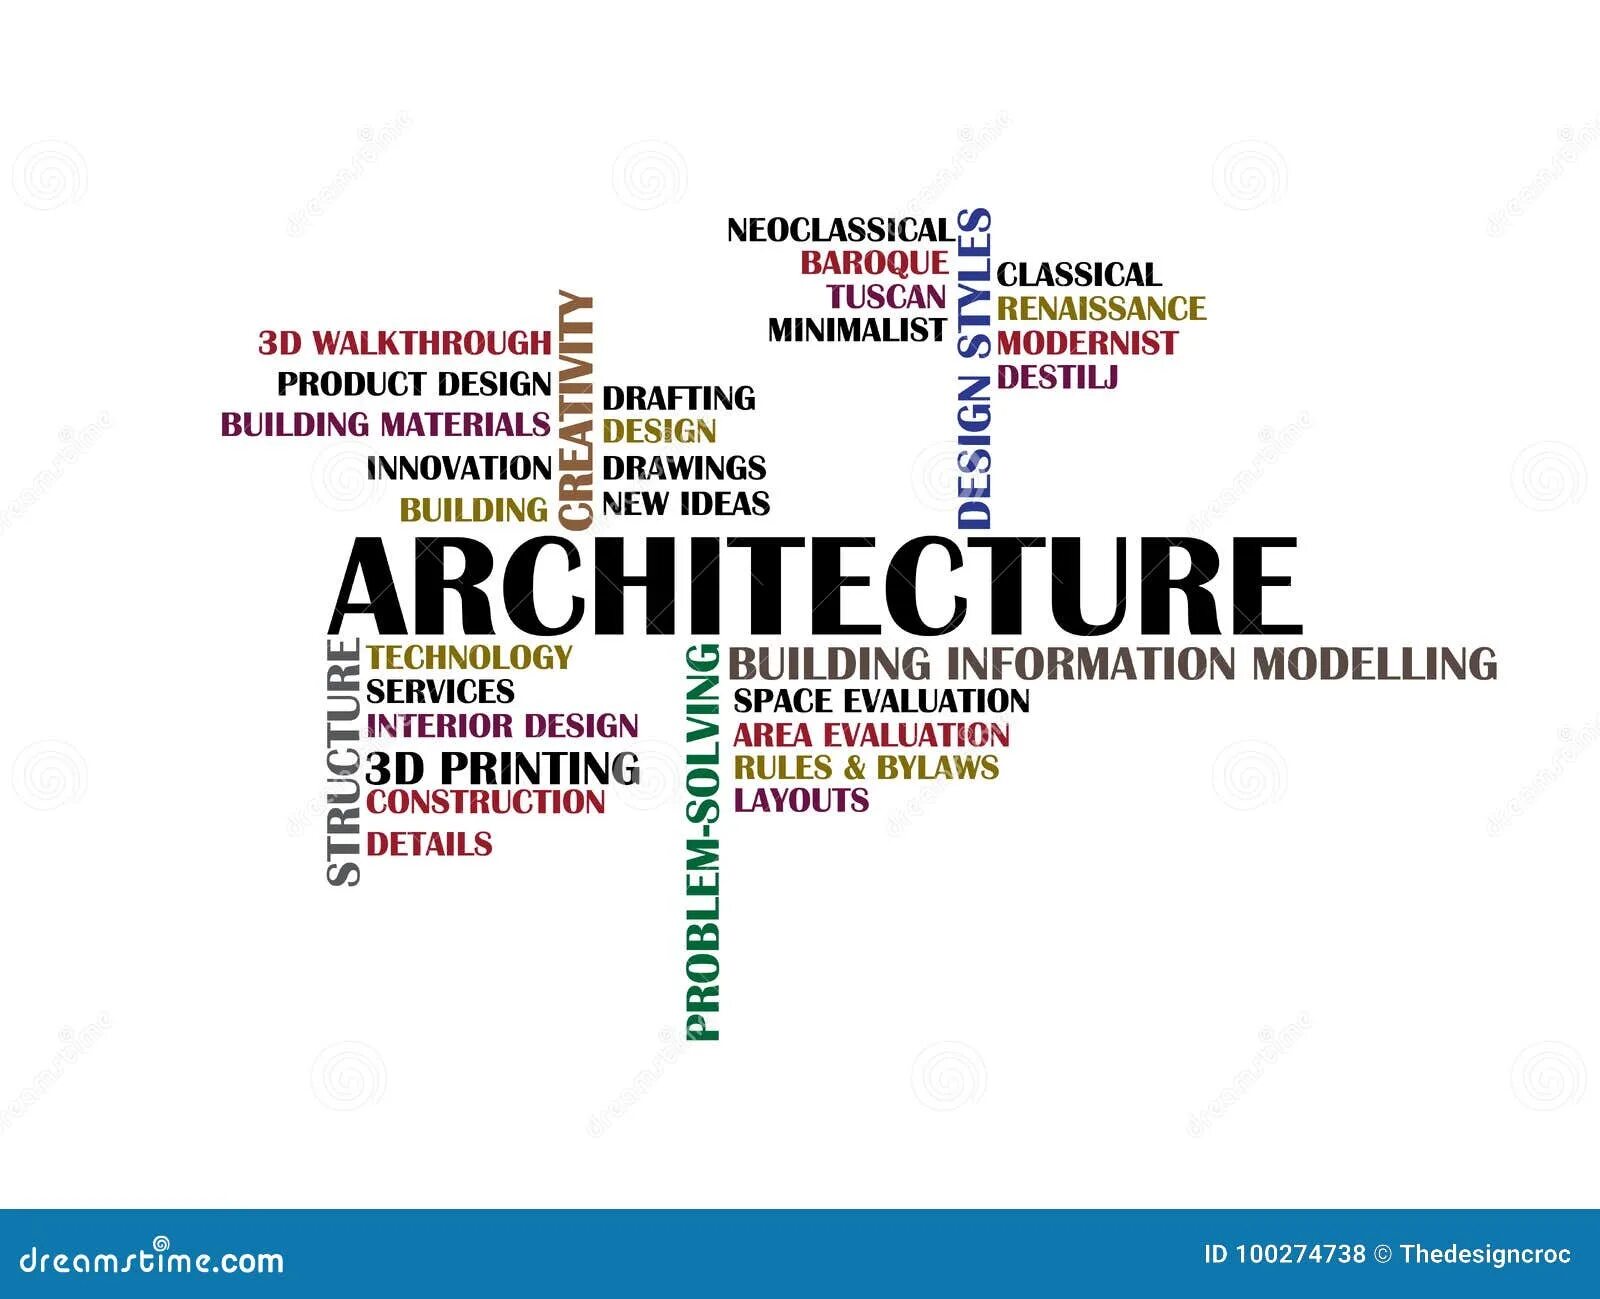 Architecture text. Architecture надпись. Архитектура слово. Архитектурные слова. Архитектура текст.